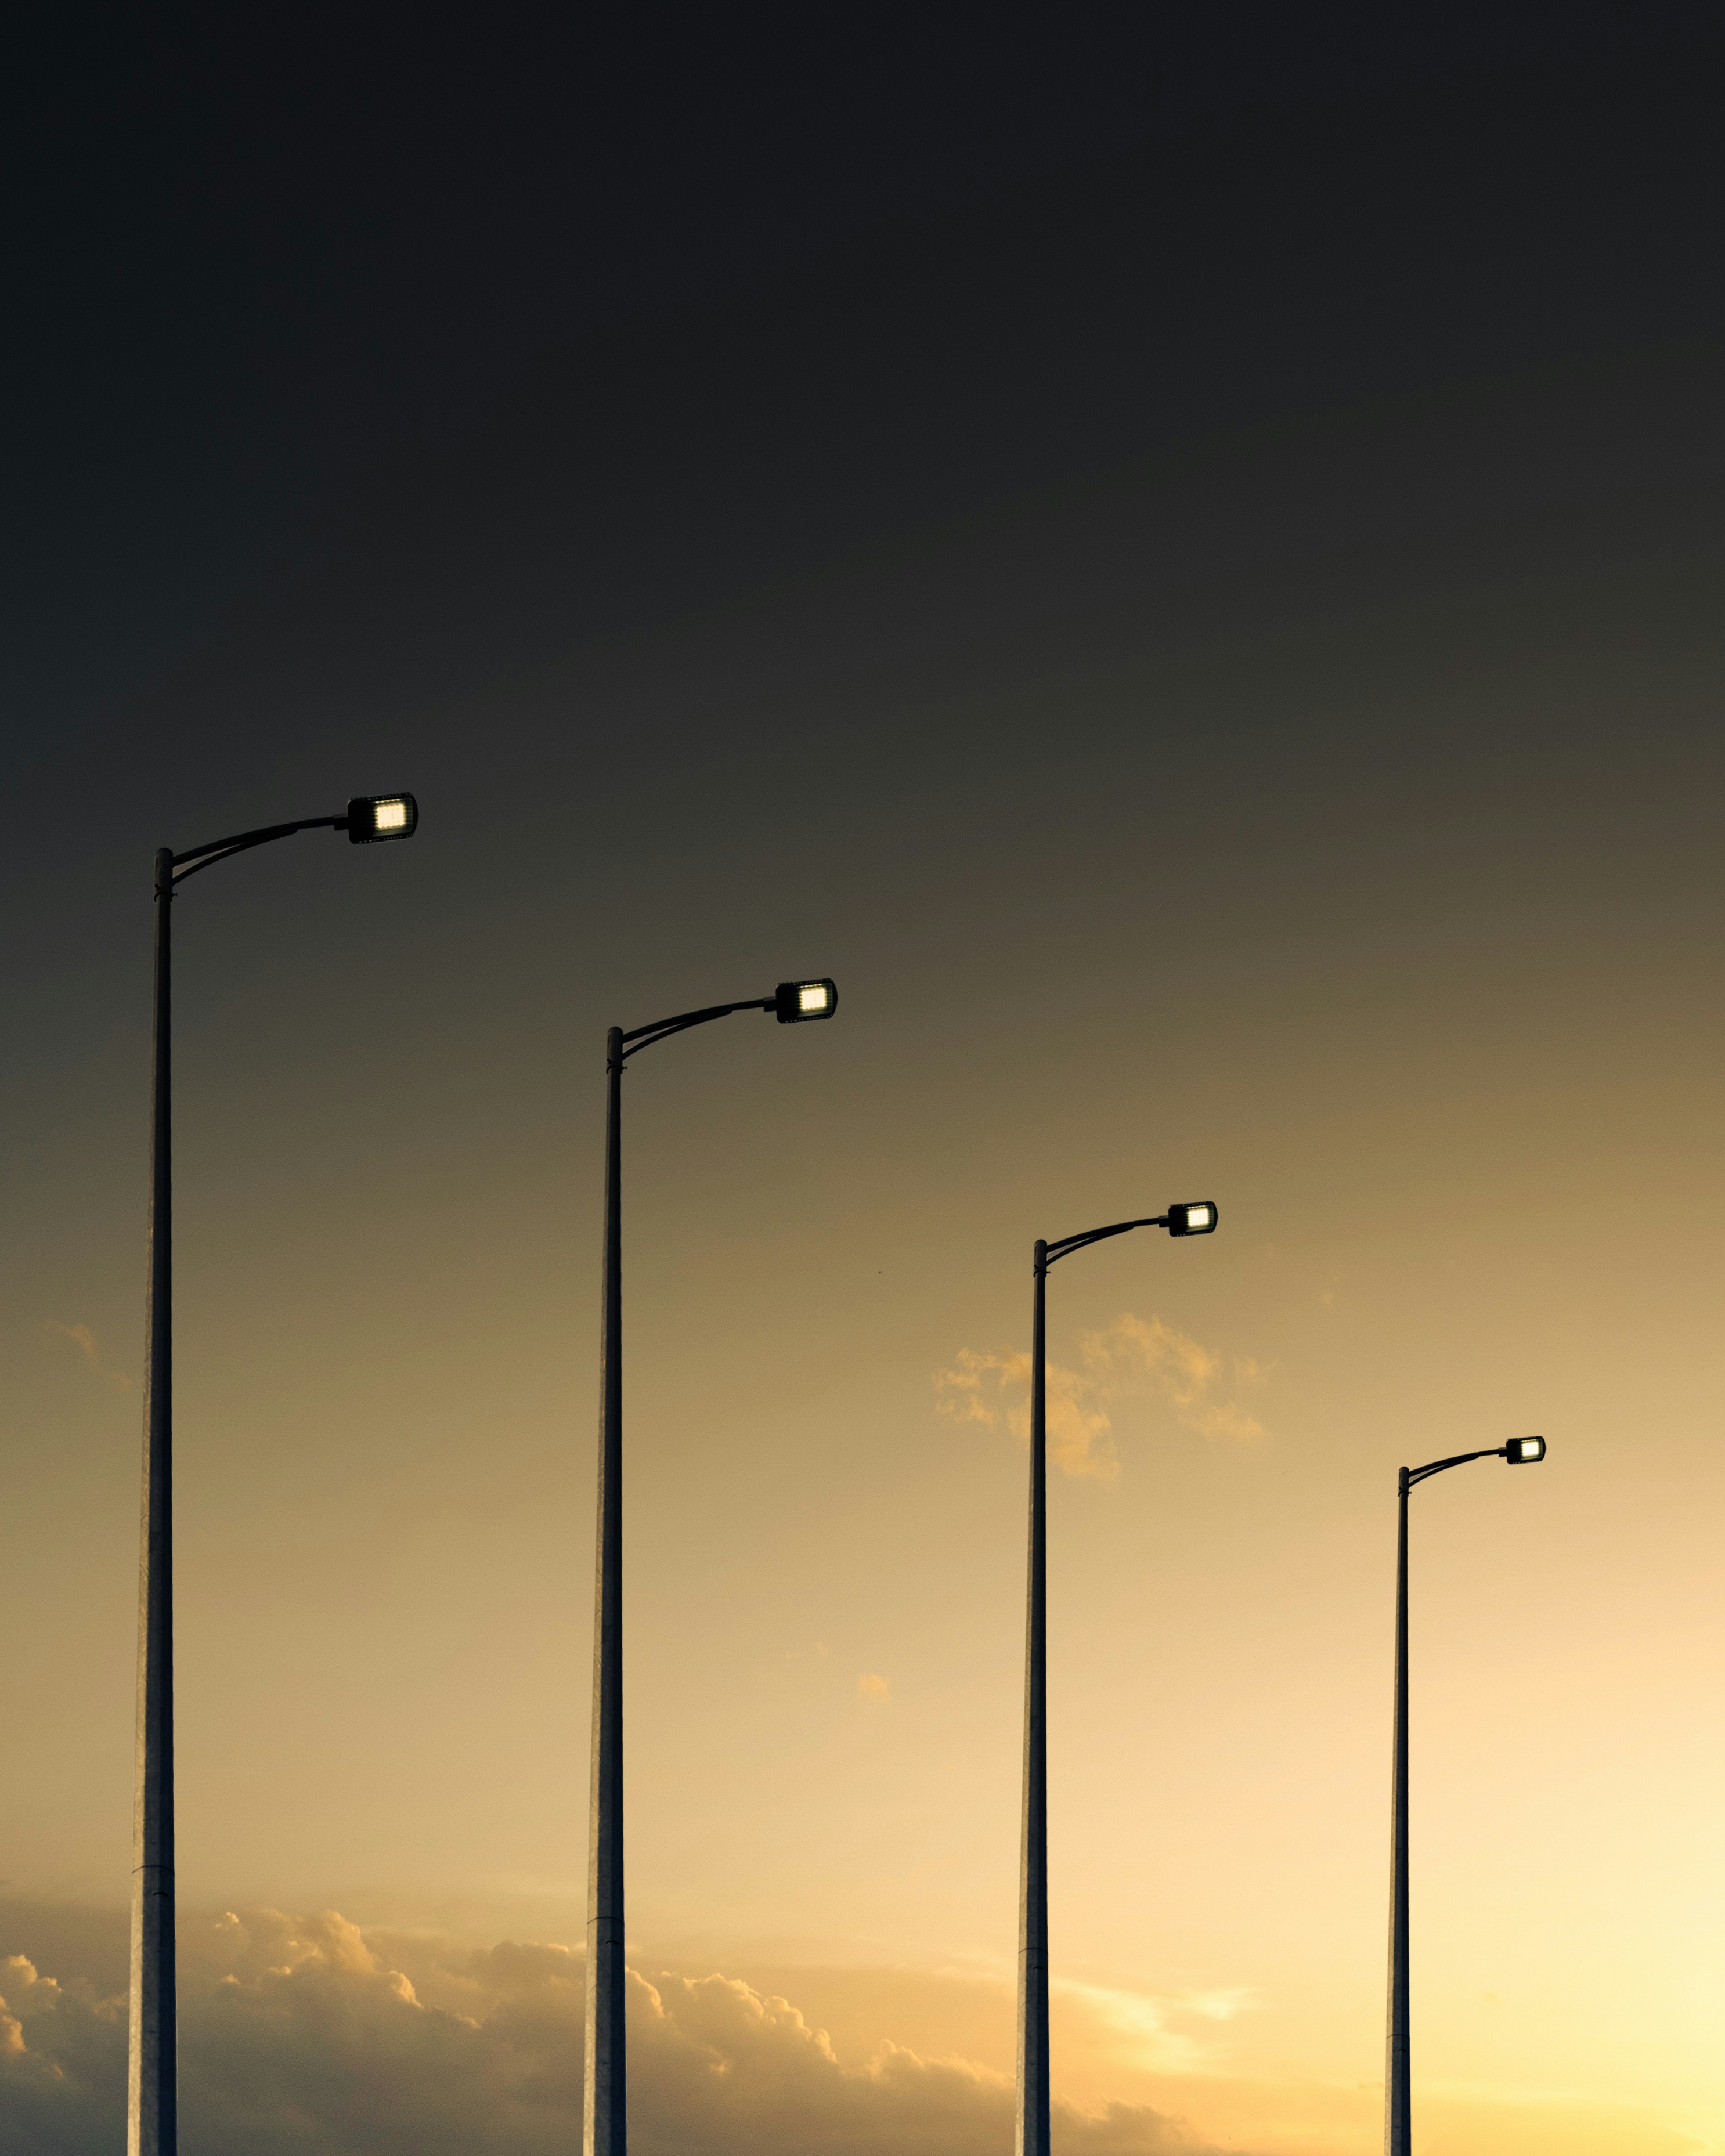 led pole light